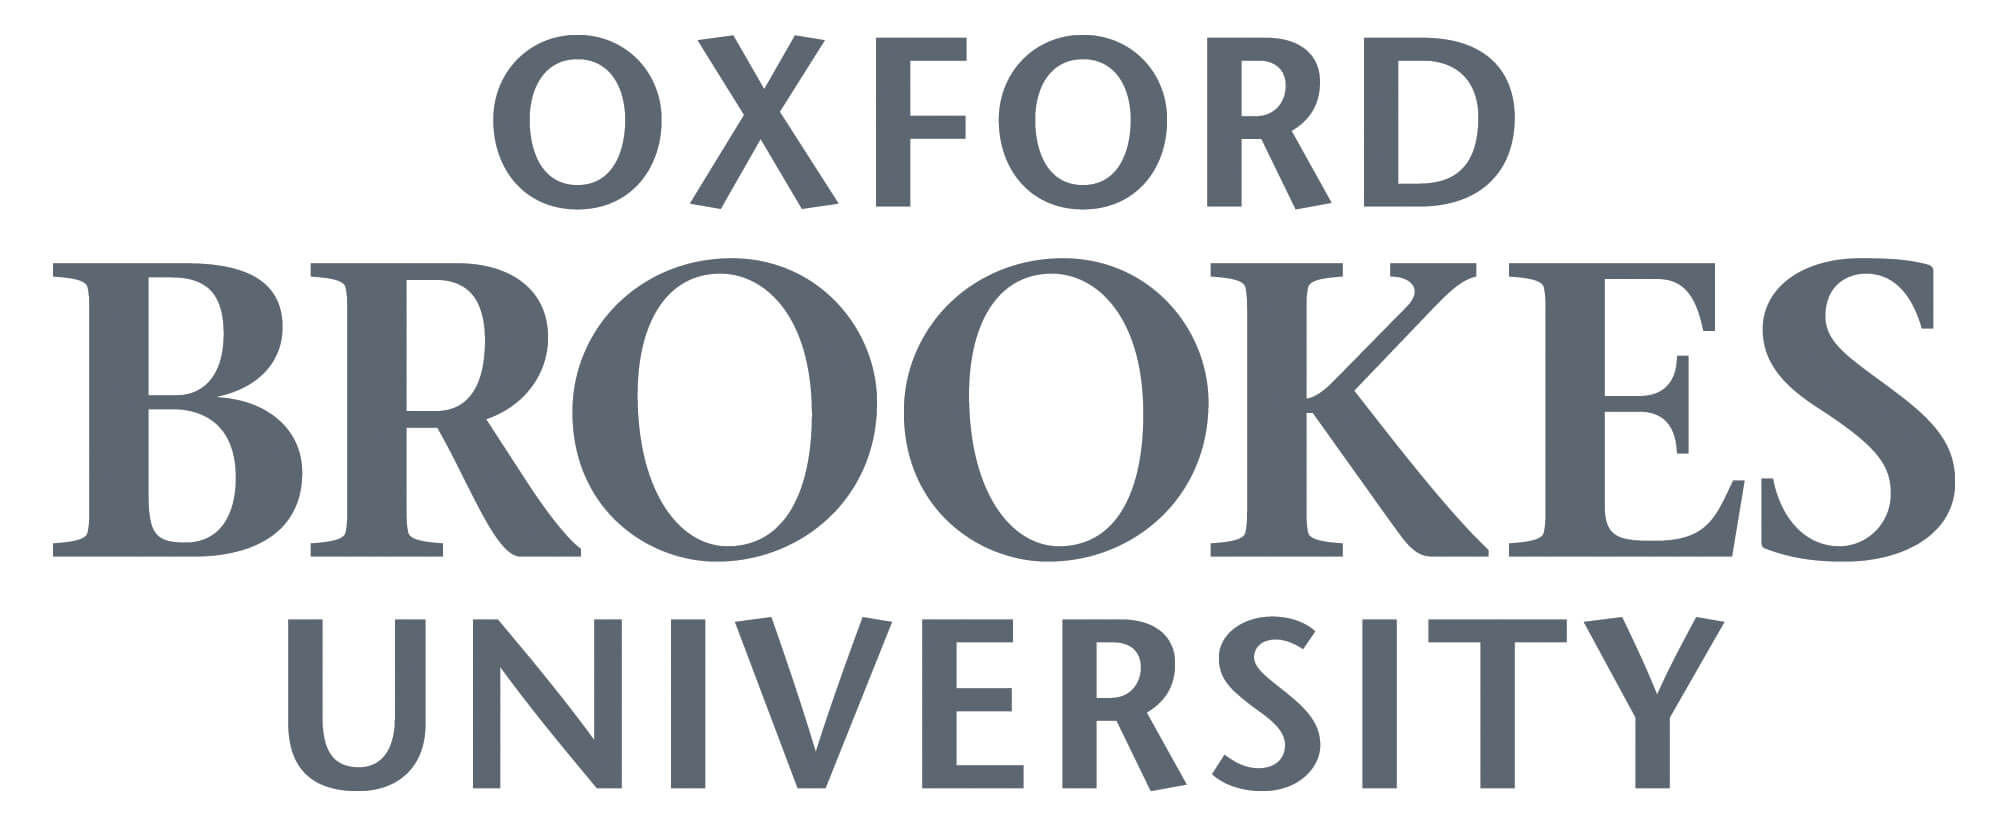 Oxford Brookes